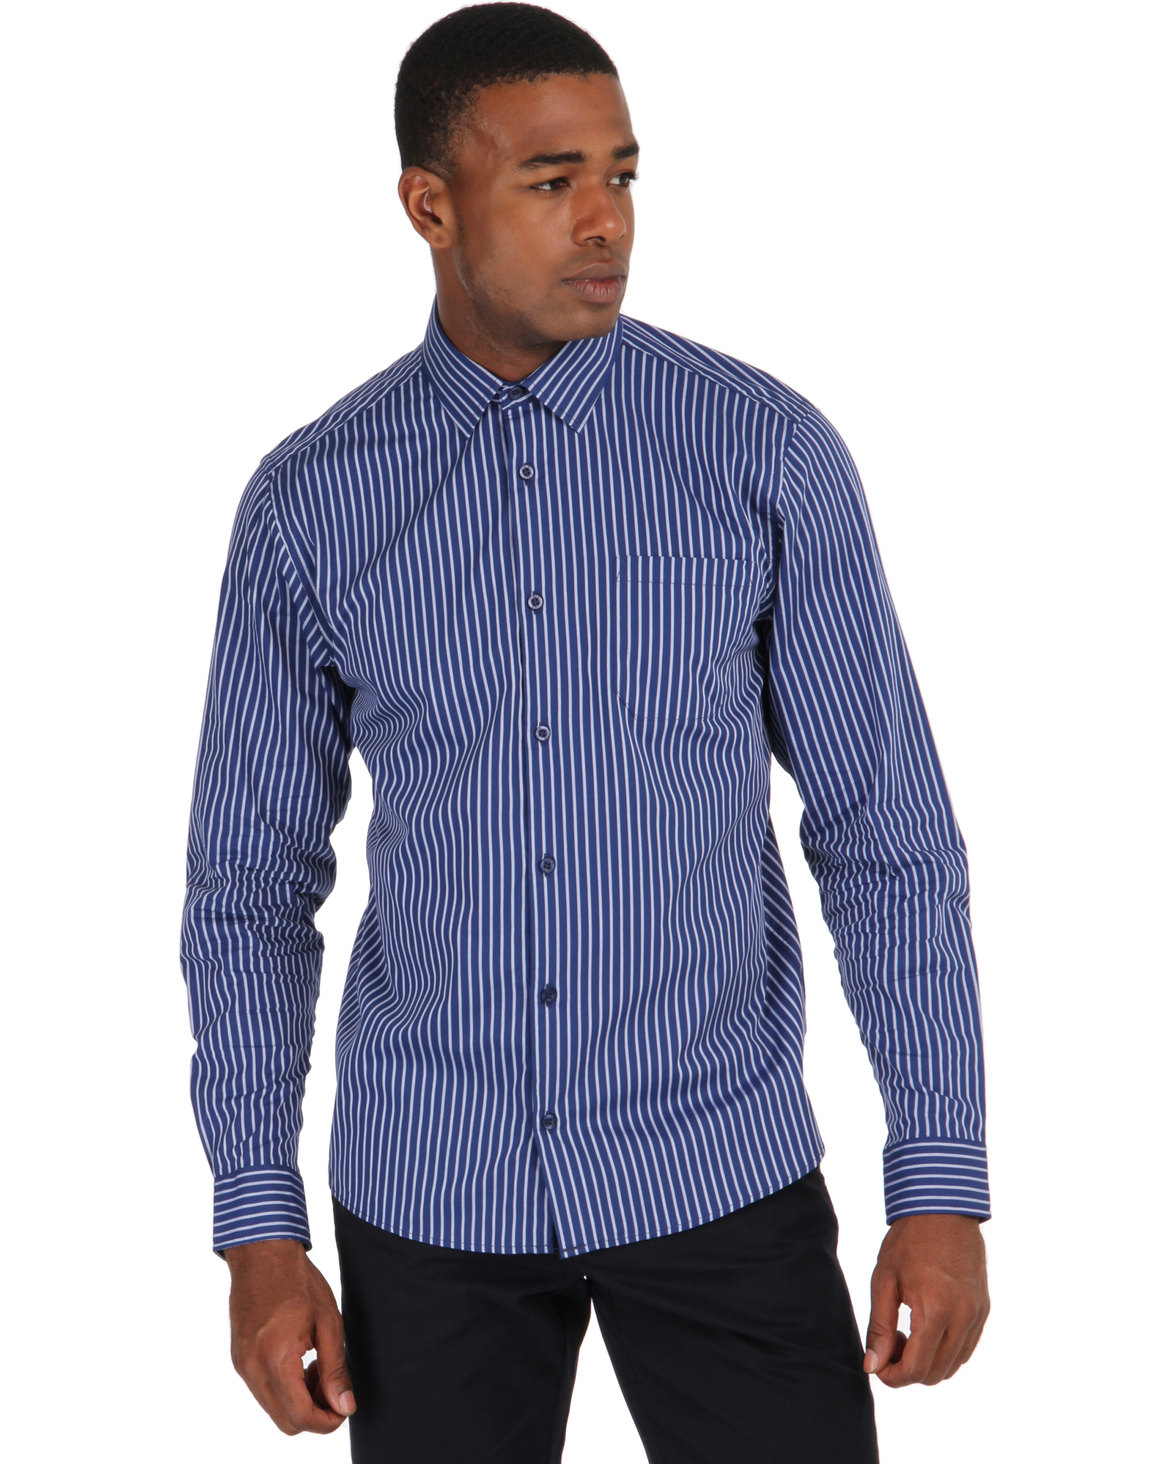 J Crew Brands Stripe Formal Long Sleeve Shirt Navy | Zando